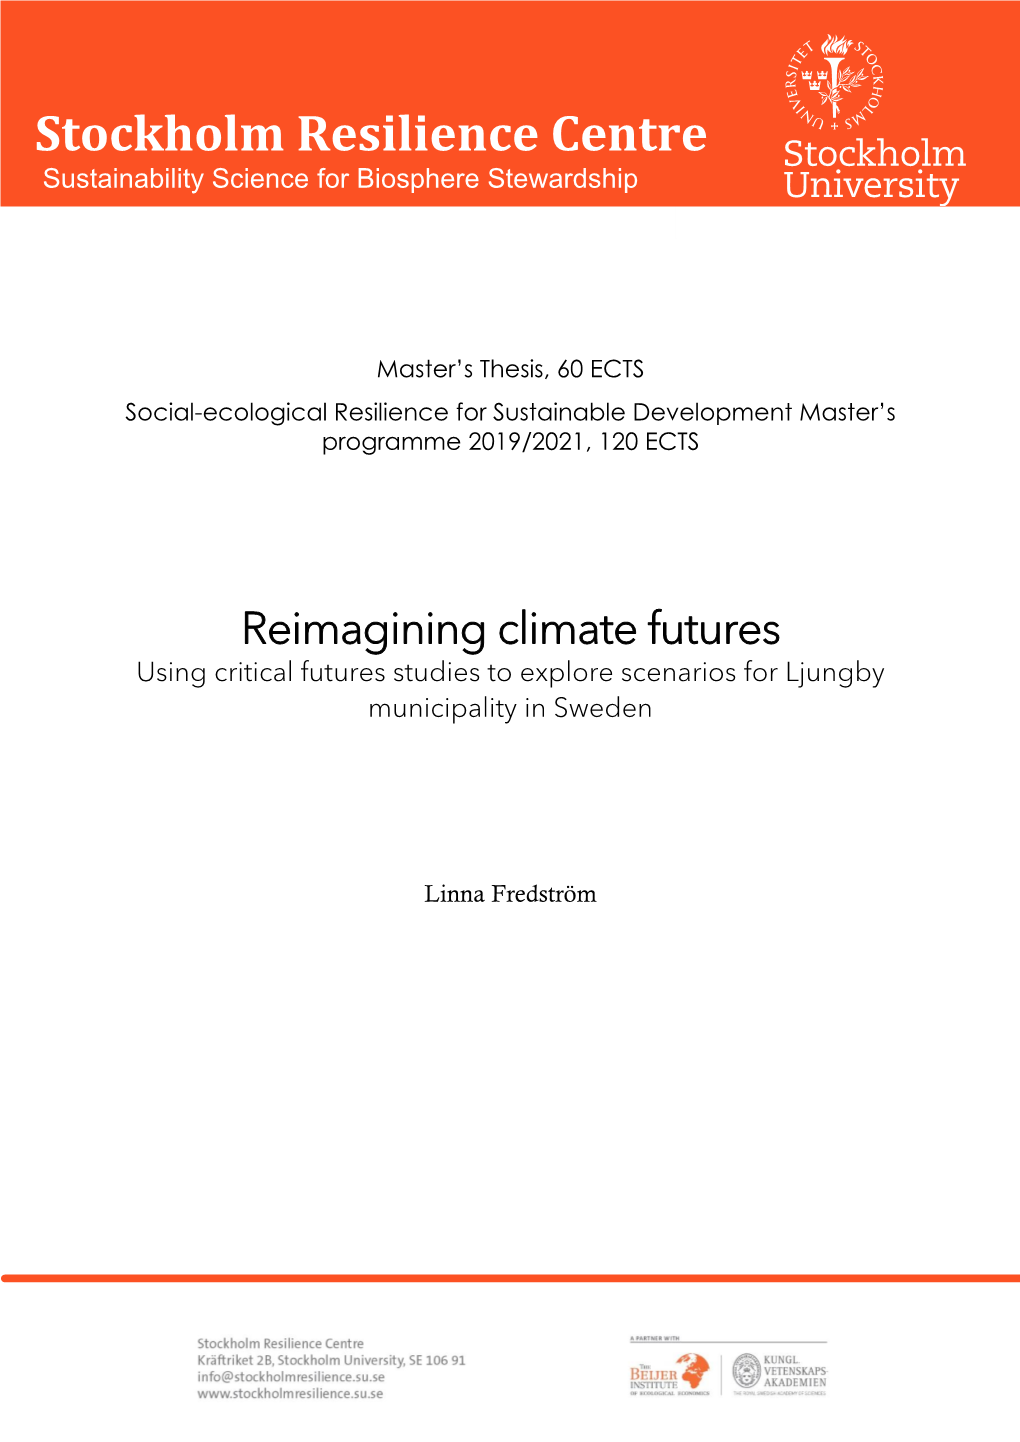 Reimagining Climate Futures Using Critical Futures Studies to Explore Scenarios for Ljungby Municipality in Sweden